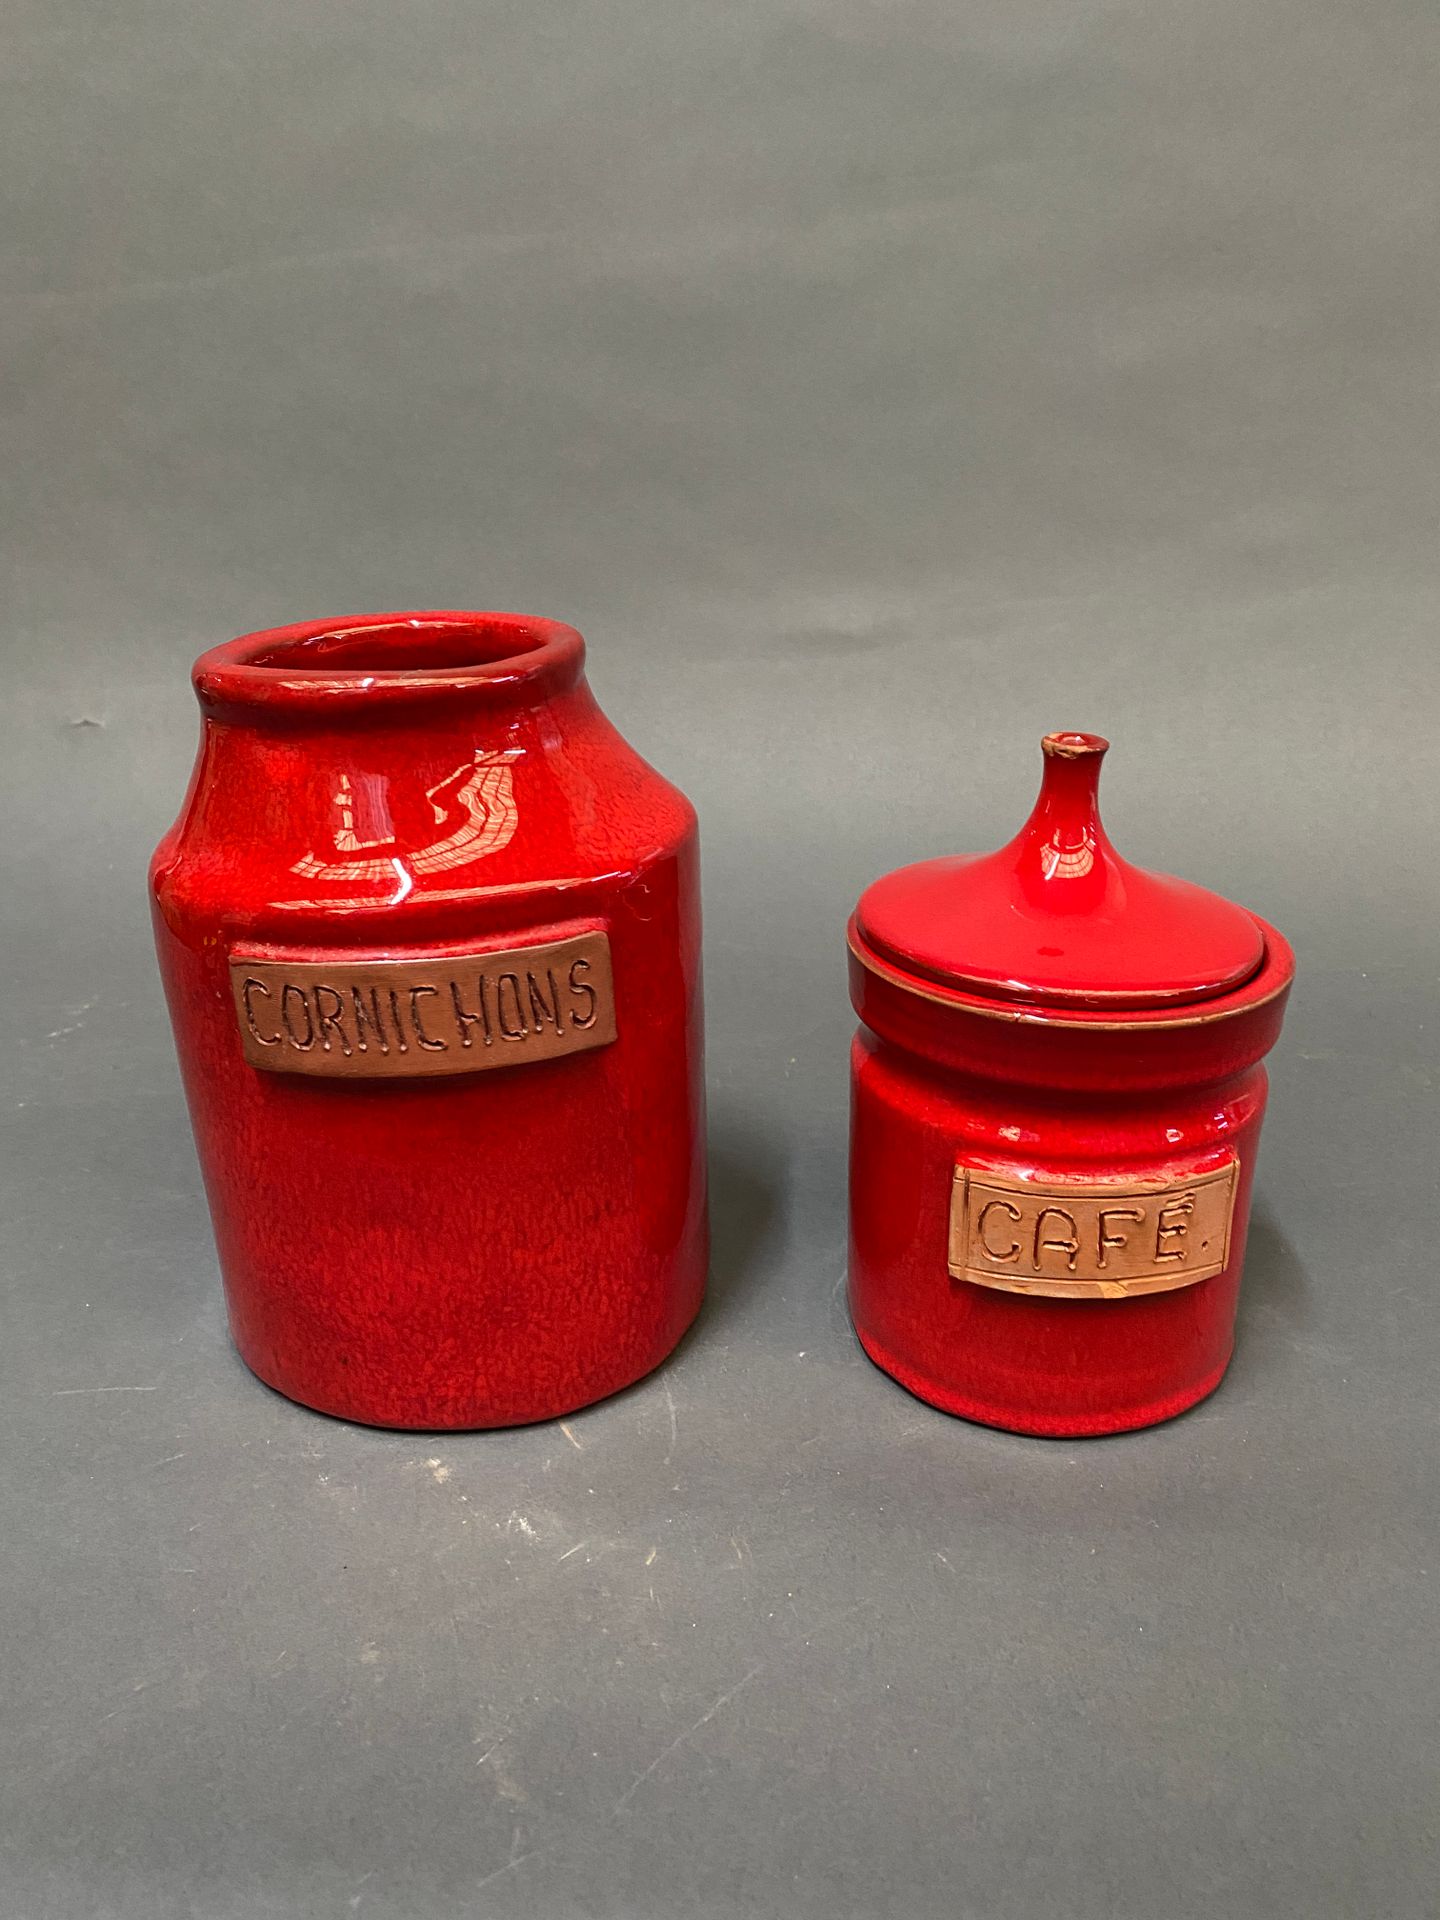 Null CLOUTIER

两个红色的陶瓷盆

薯片和添加的盖子

H.大的为19.5厘米